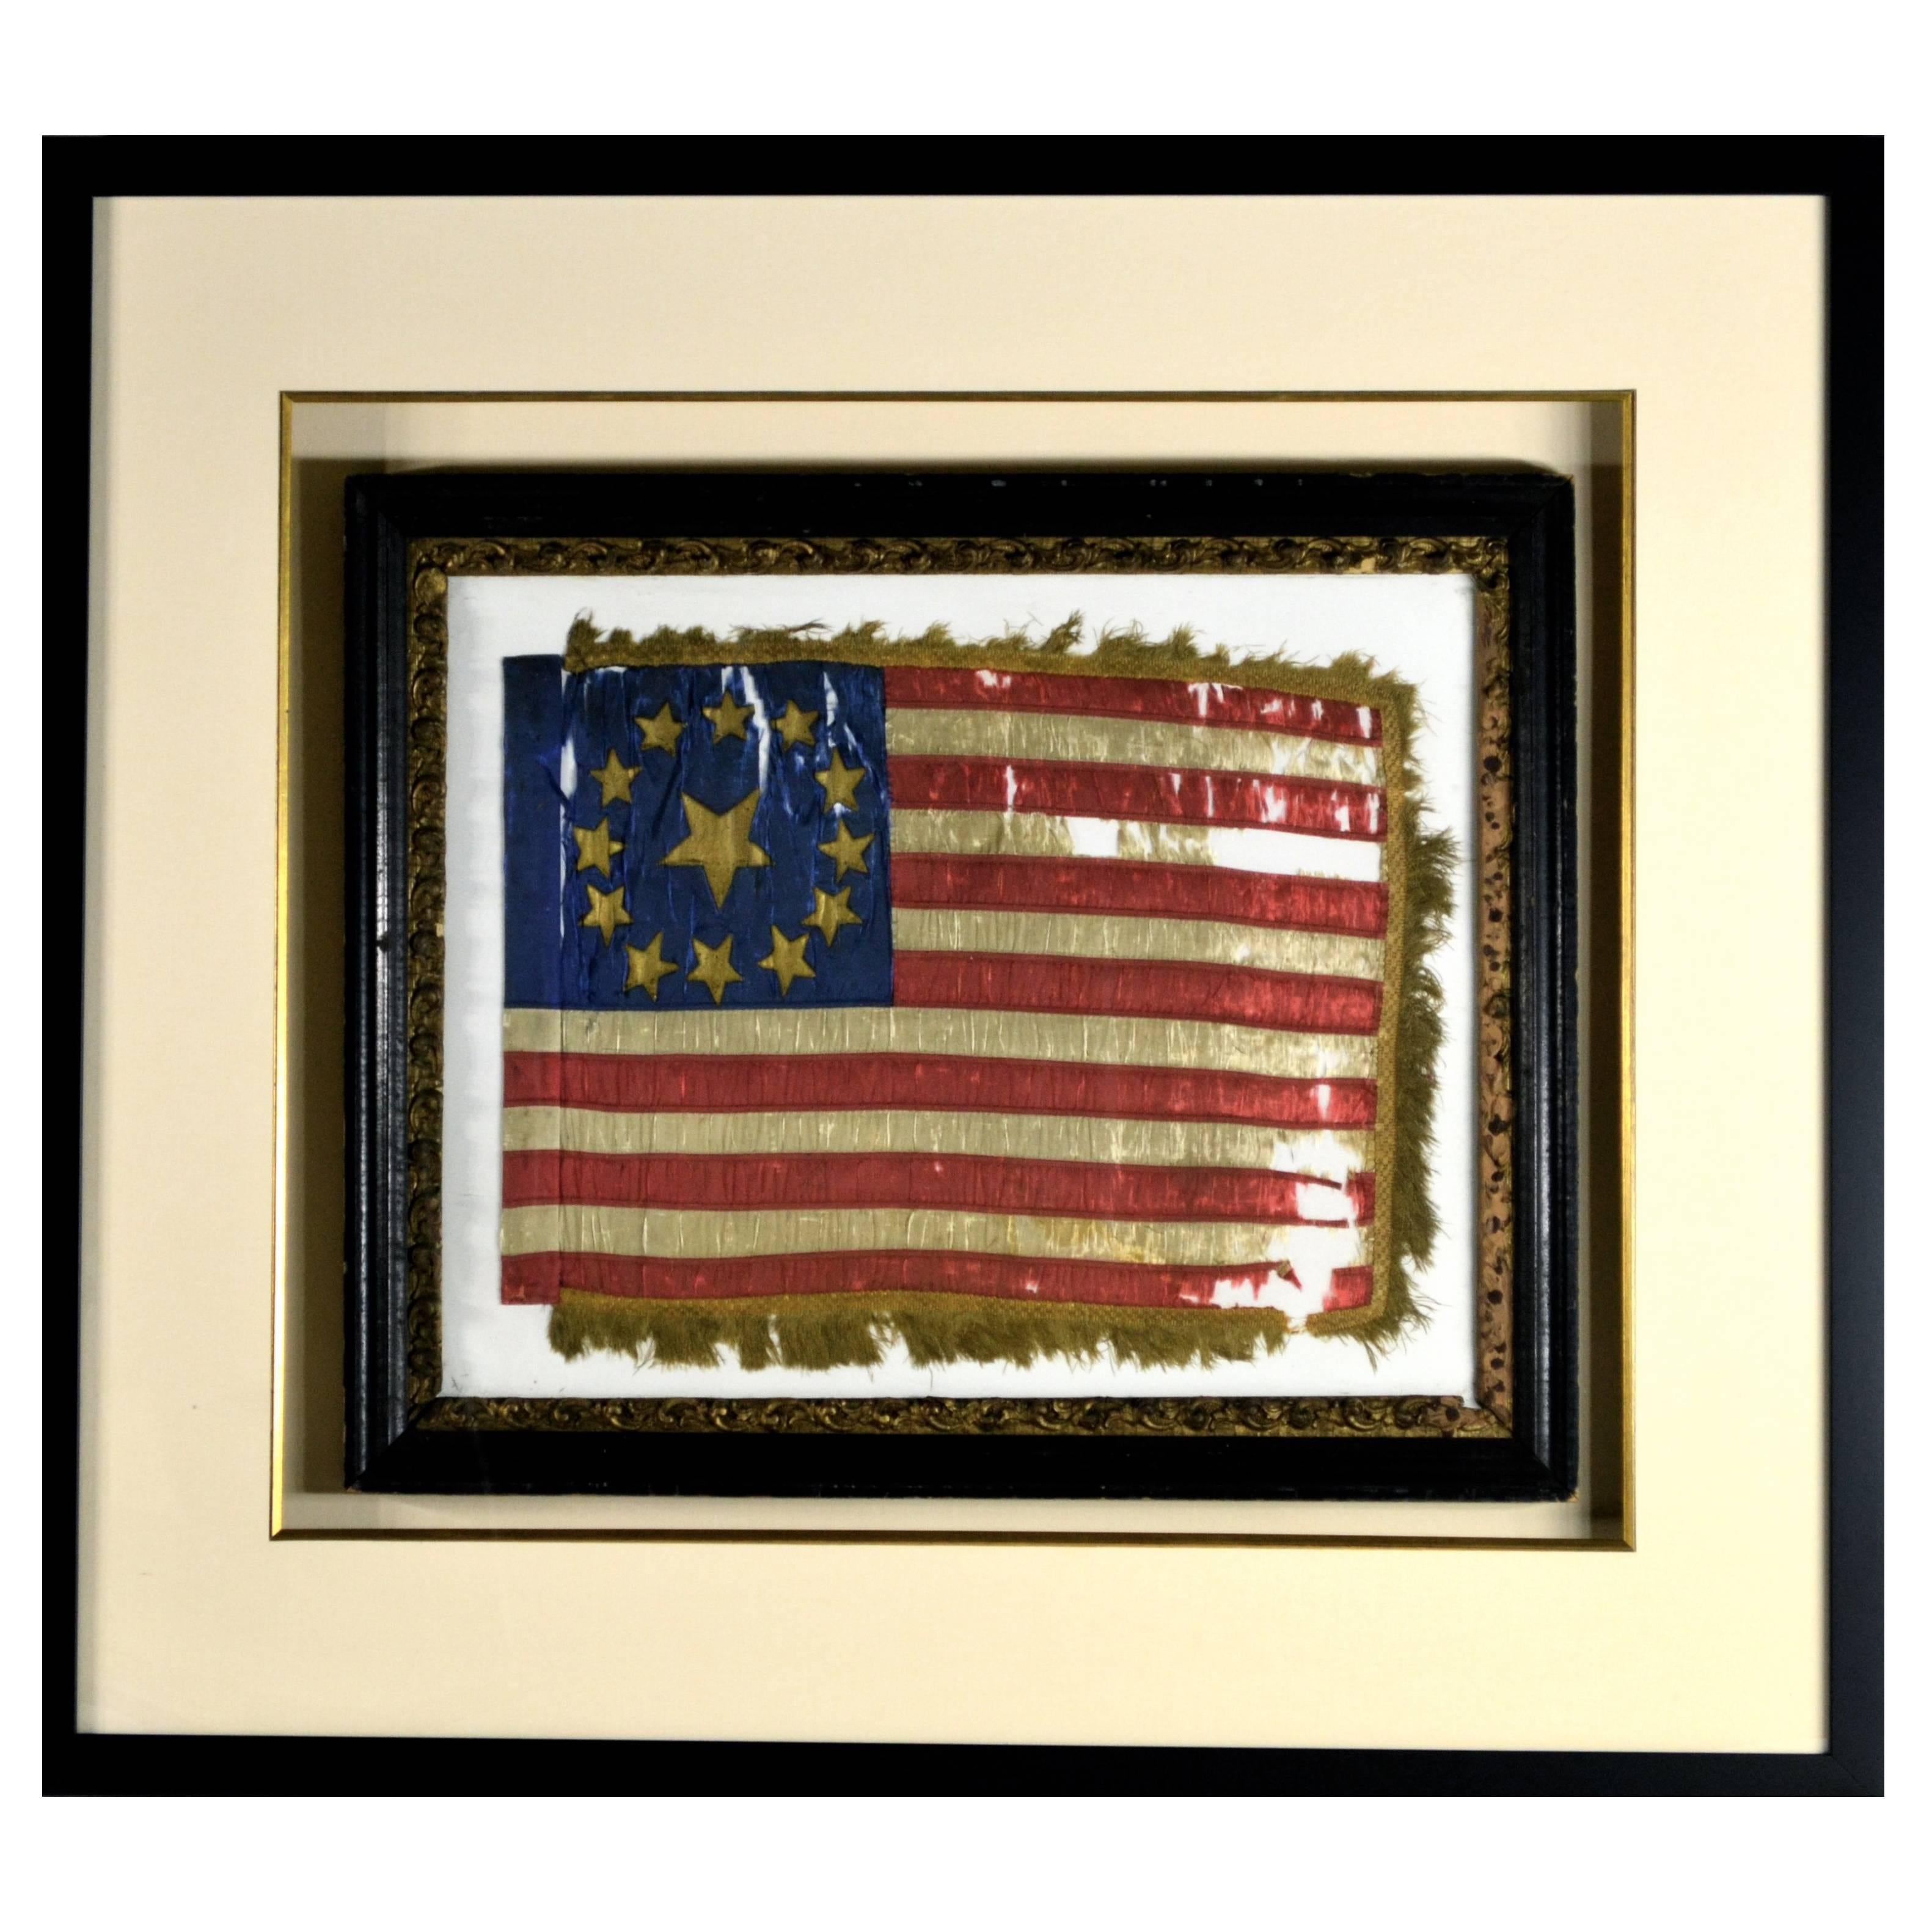 Rare 13 Star Civil War Flag with Gold Stars Hand Sewn For Sale